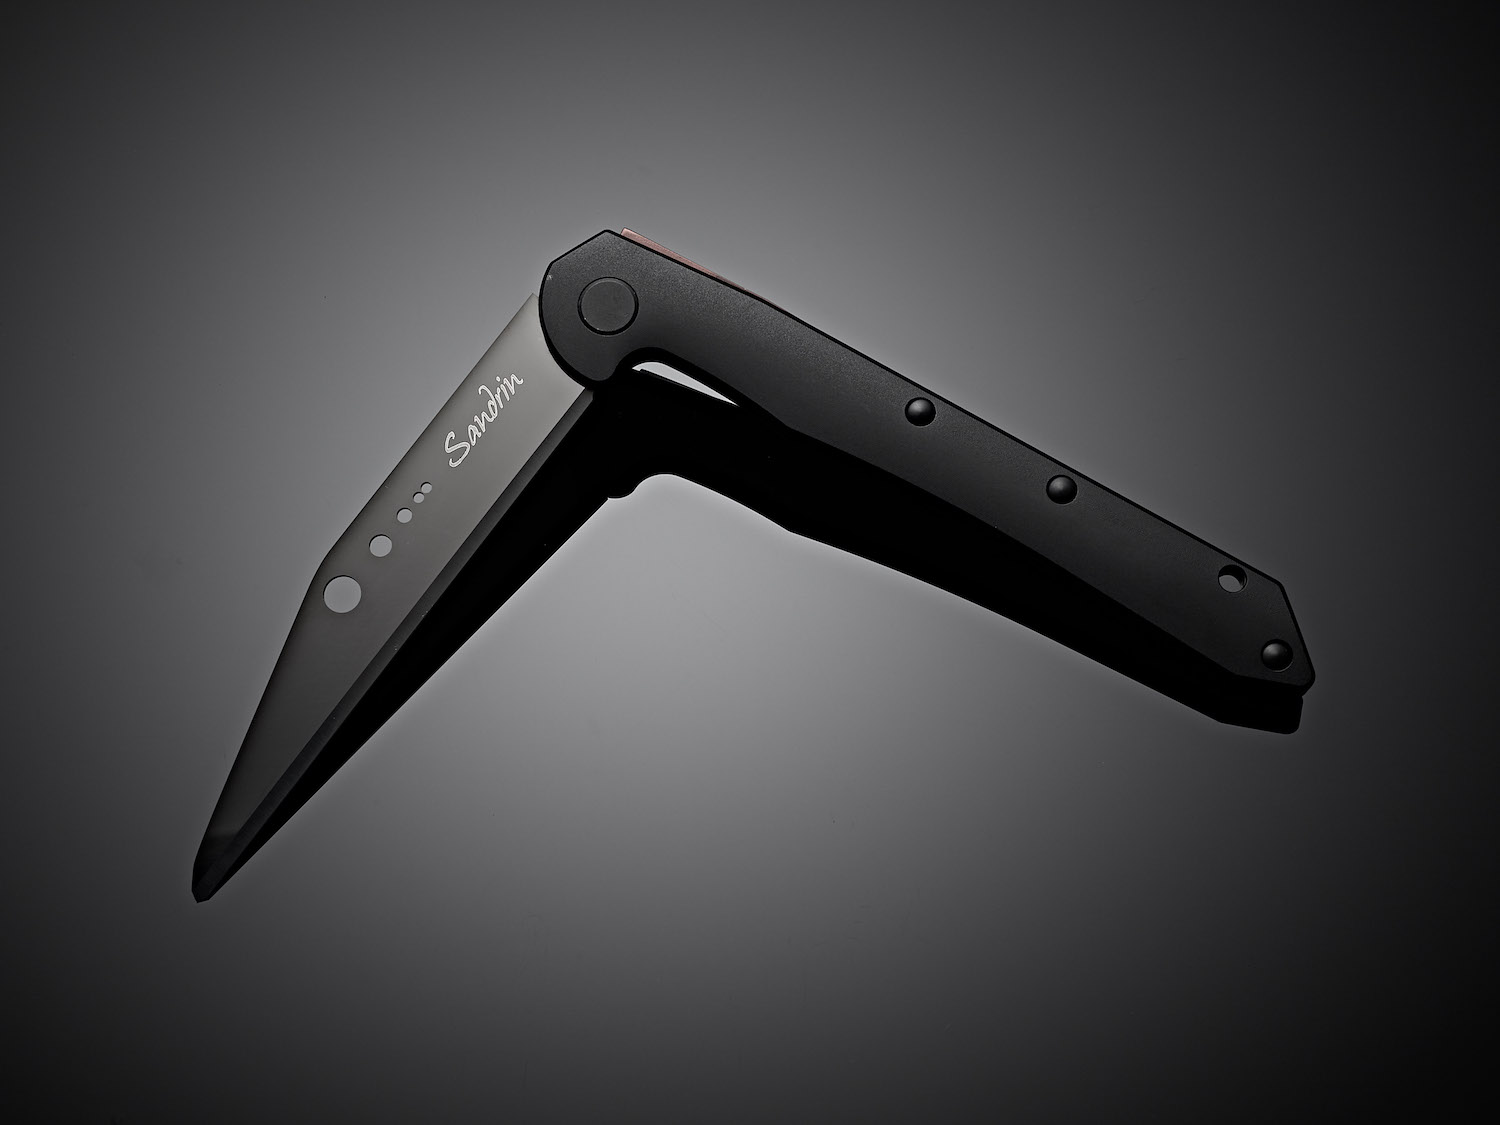 Swiss Tech 88mm (3.5) Bi-Metal Carbide Folding Pocket Knife